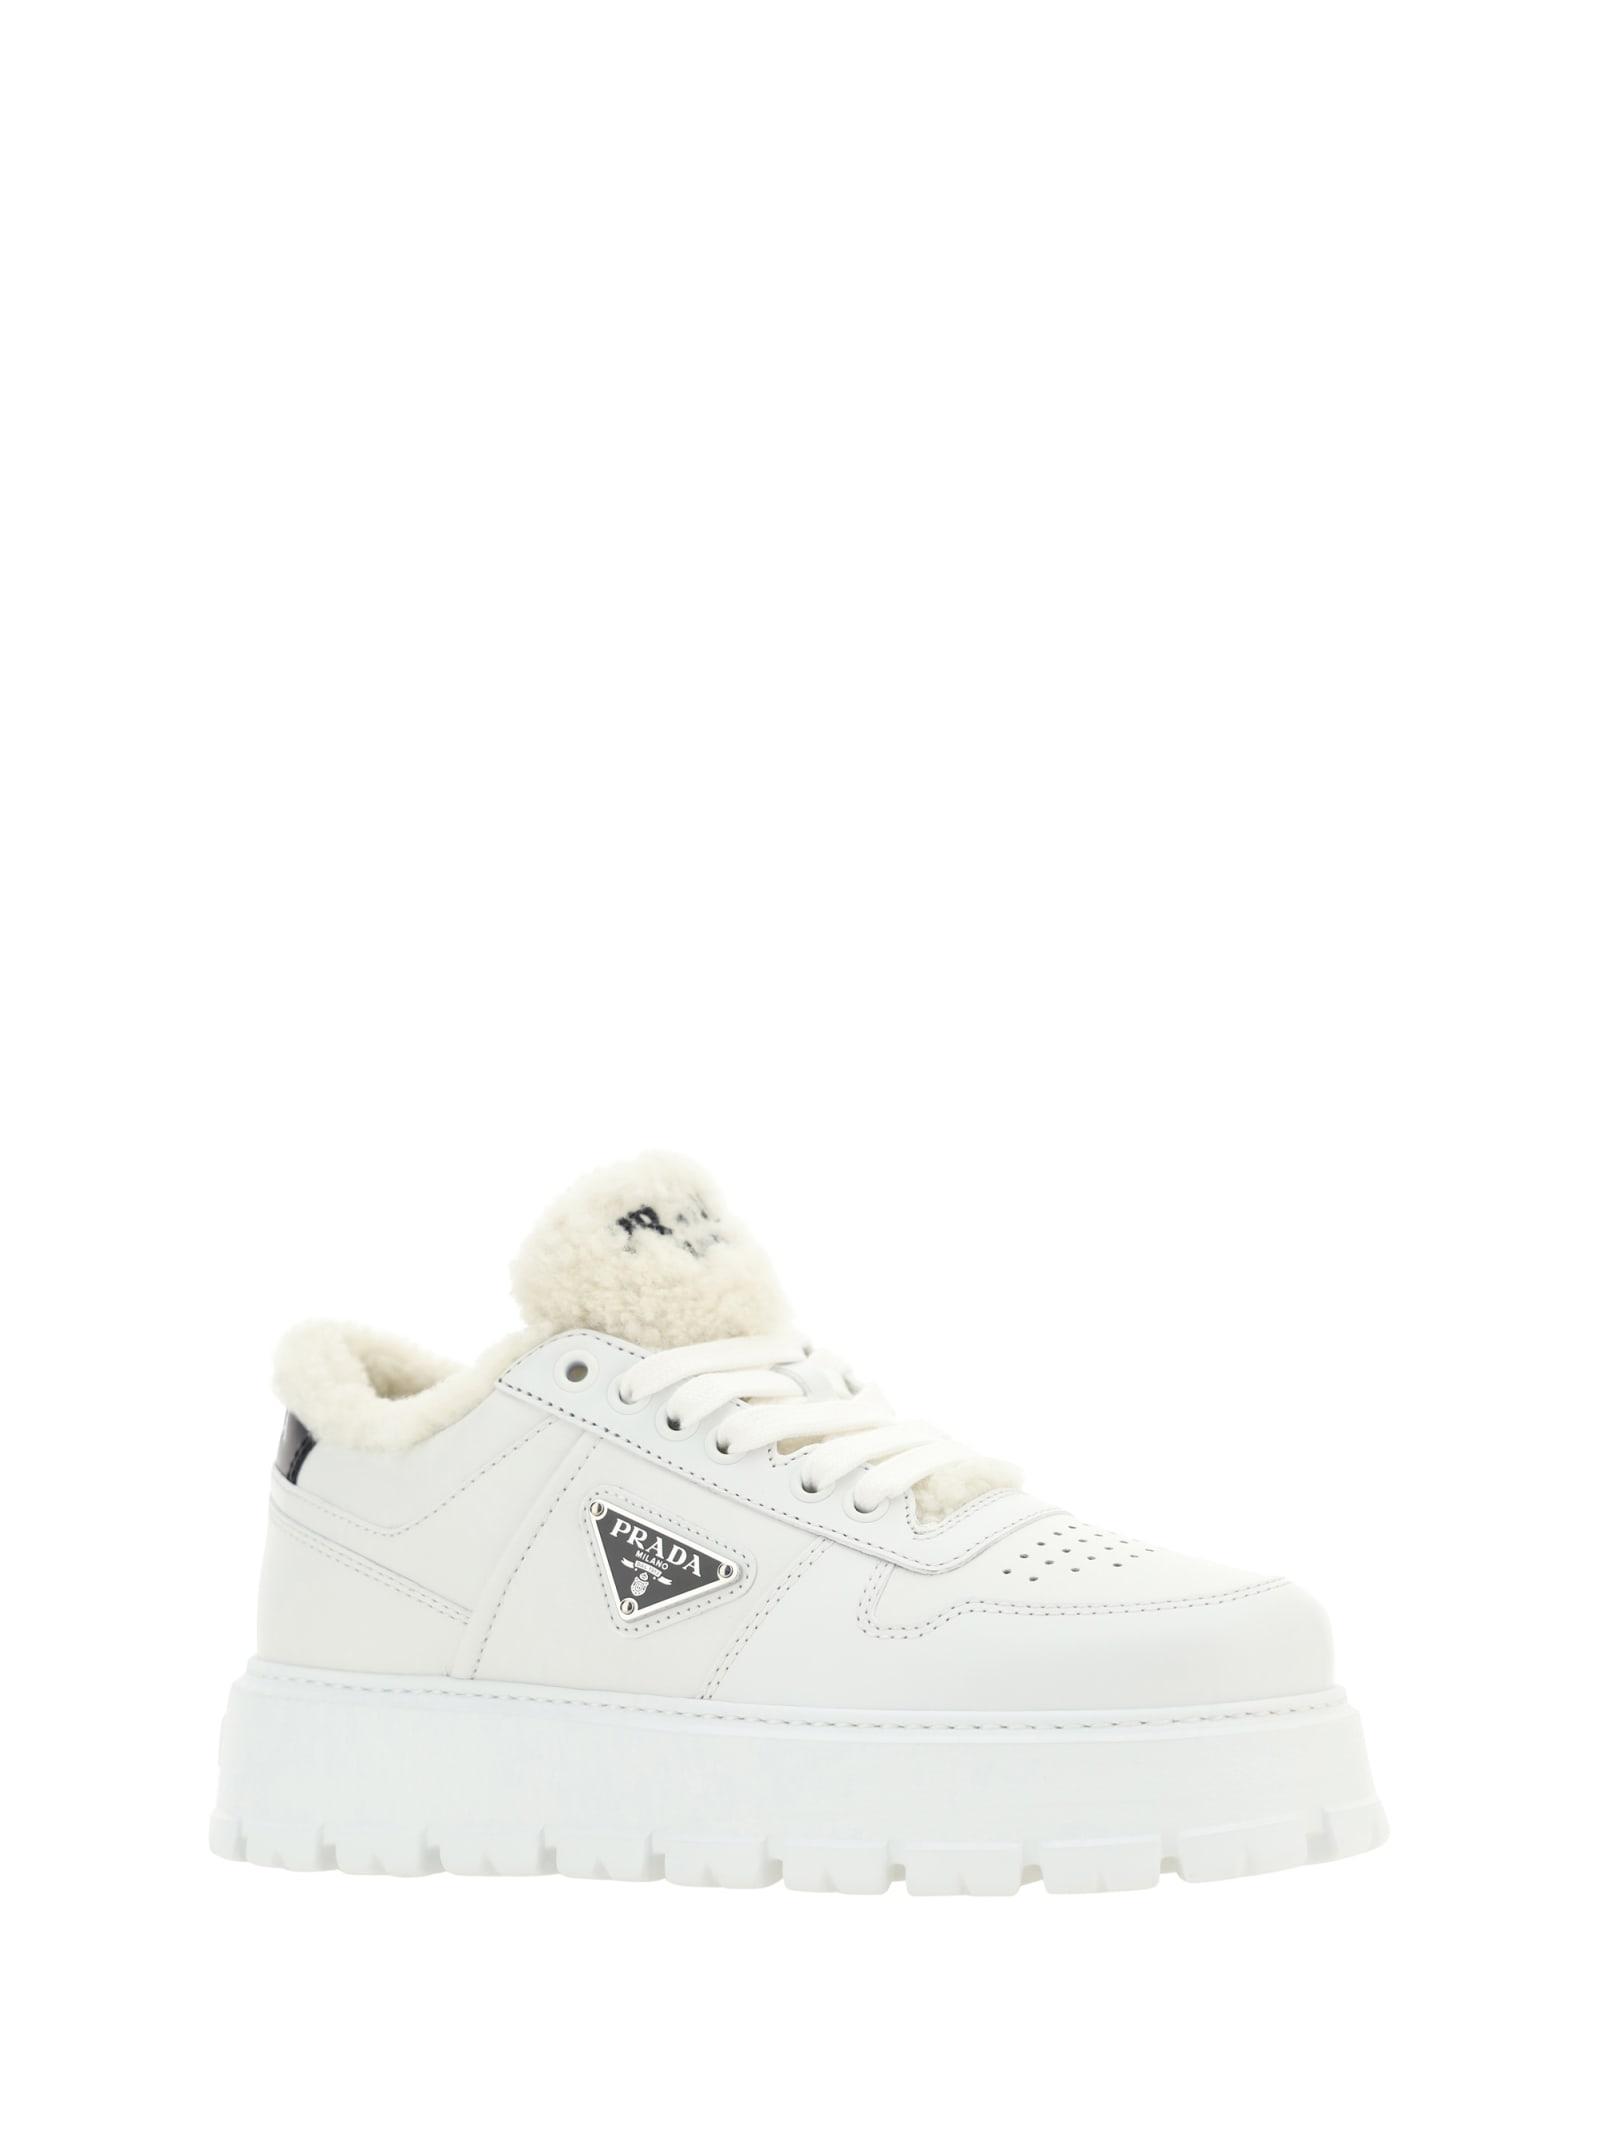 Prada Winter Sneakers in White | Lyst